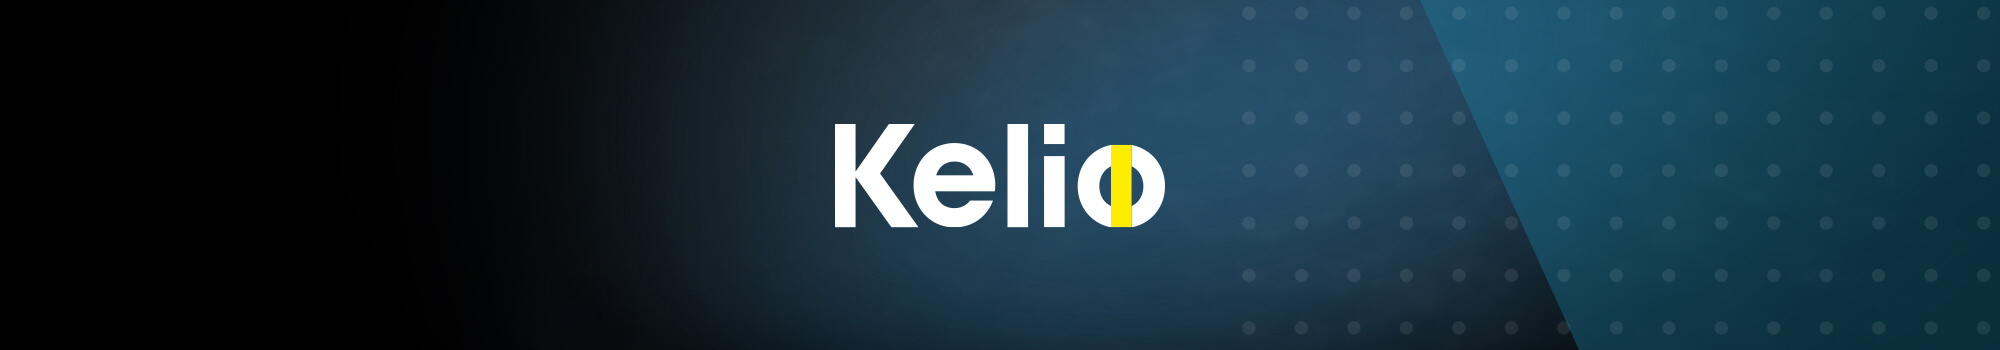 Kelio - Bodet Software